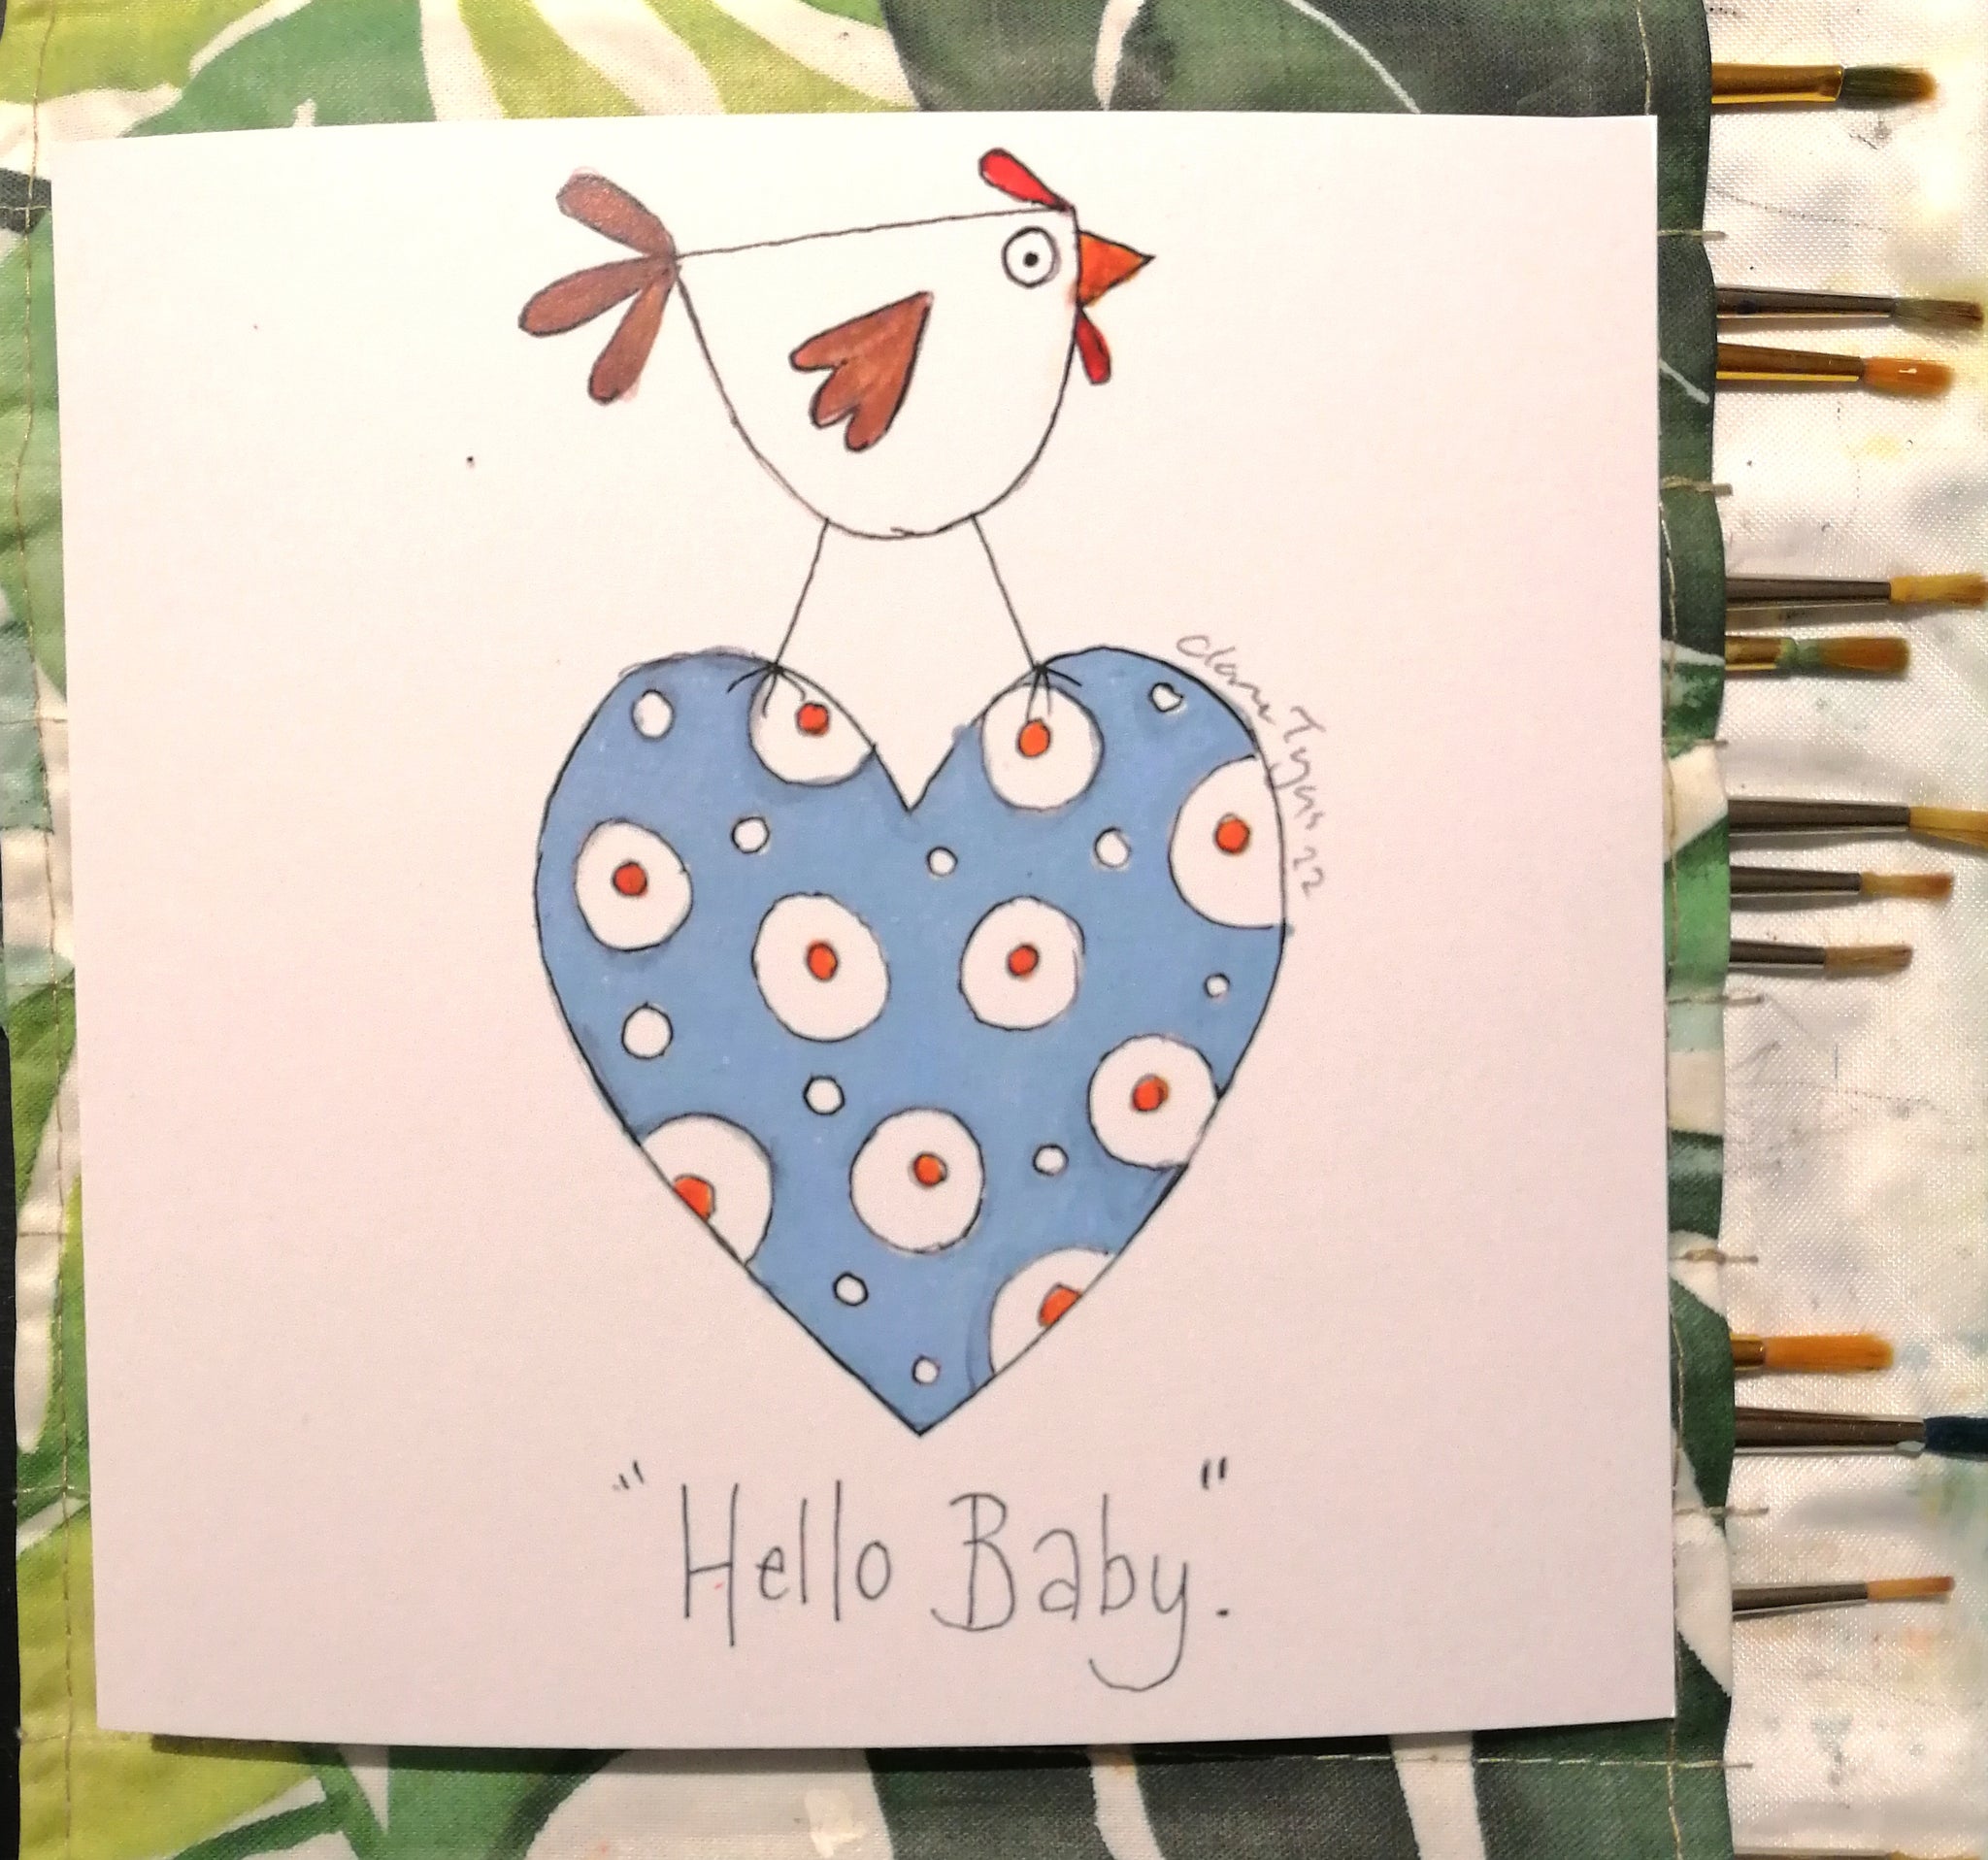 Hello Baby.  Hope, Dream. Greetings card.